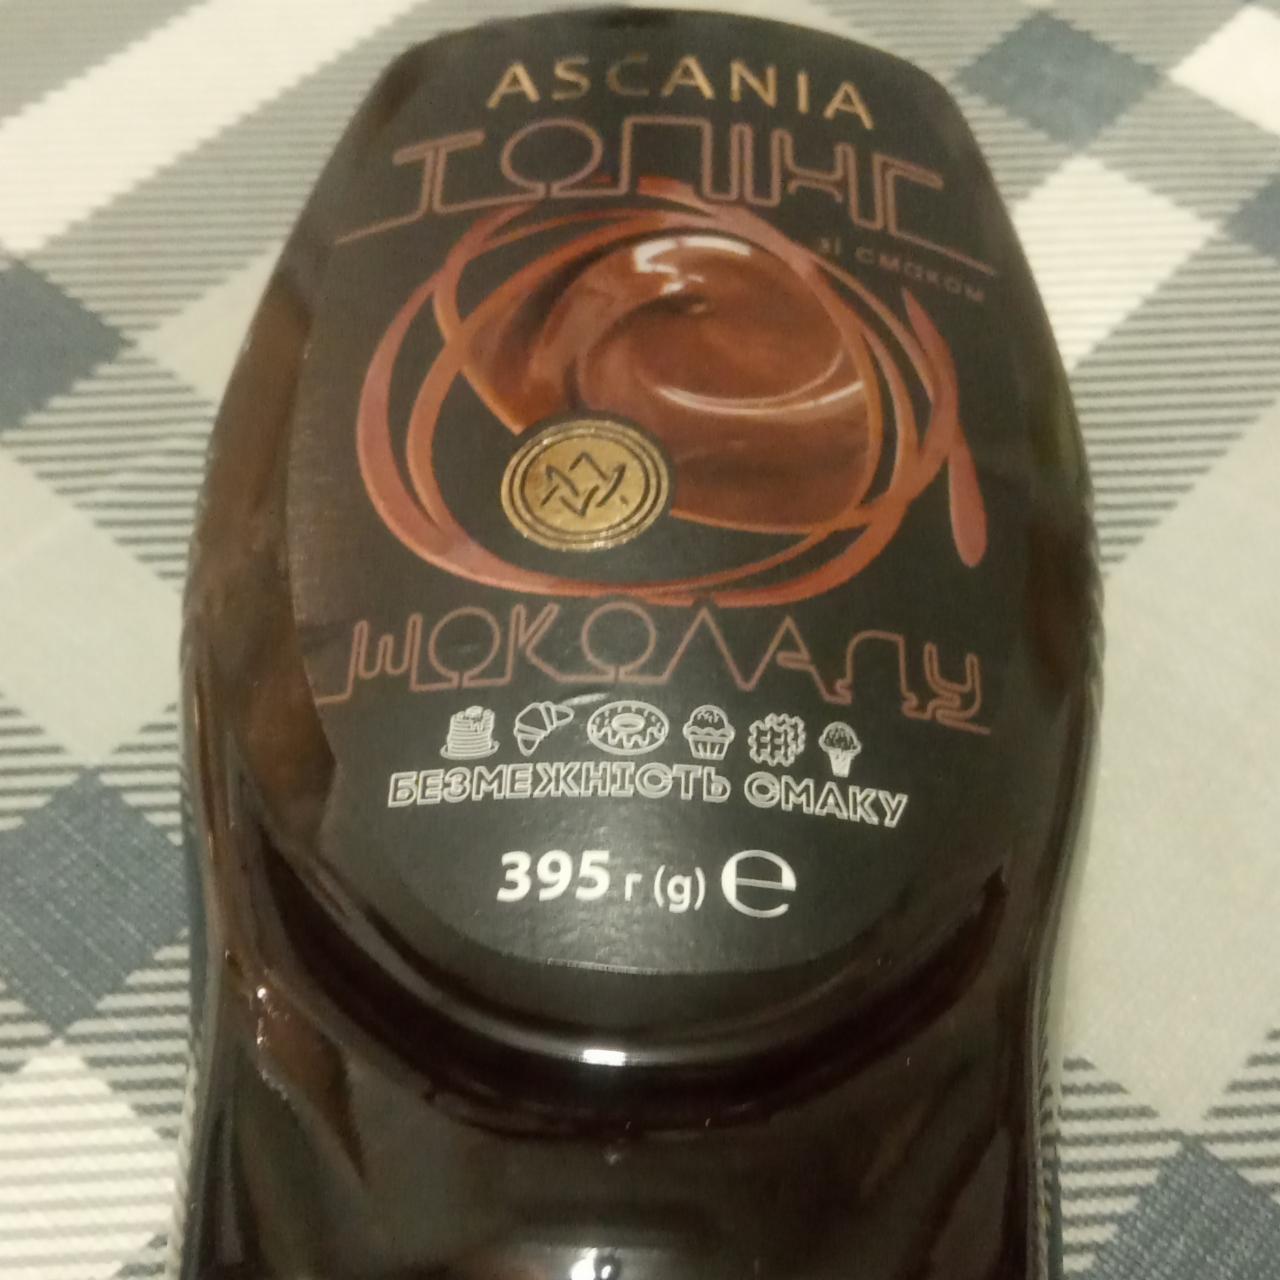 Фото - Топинг со вкусом шоколада Ascania